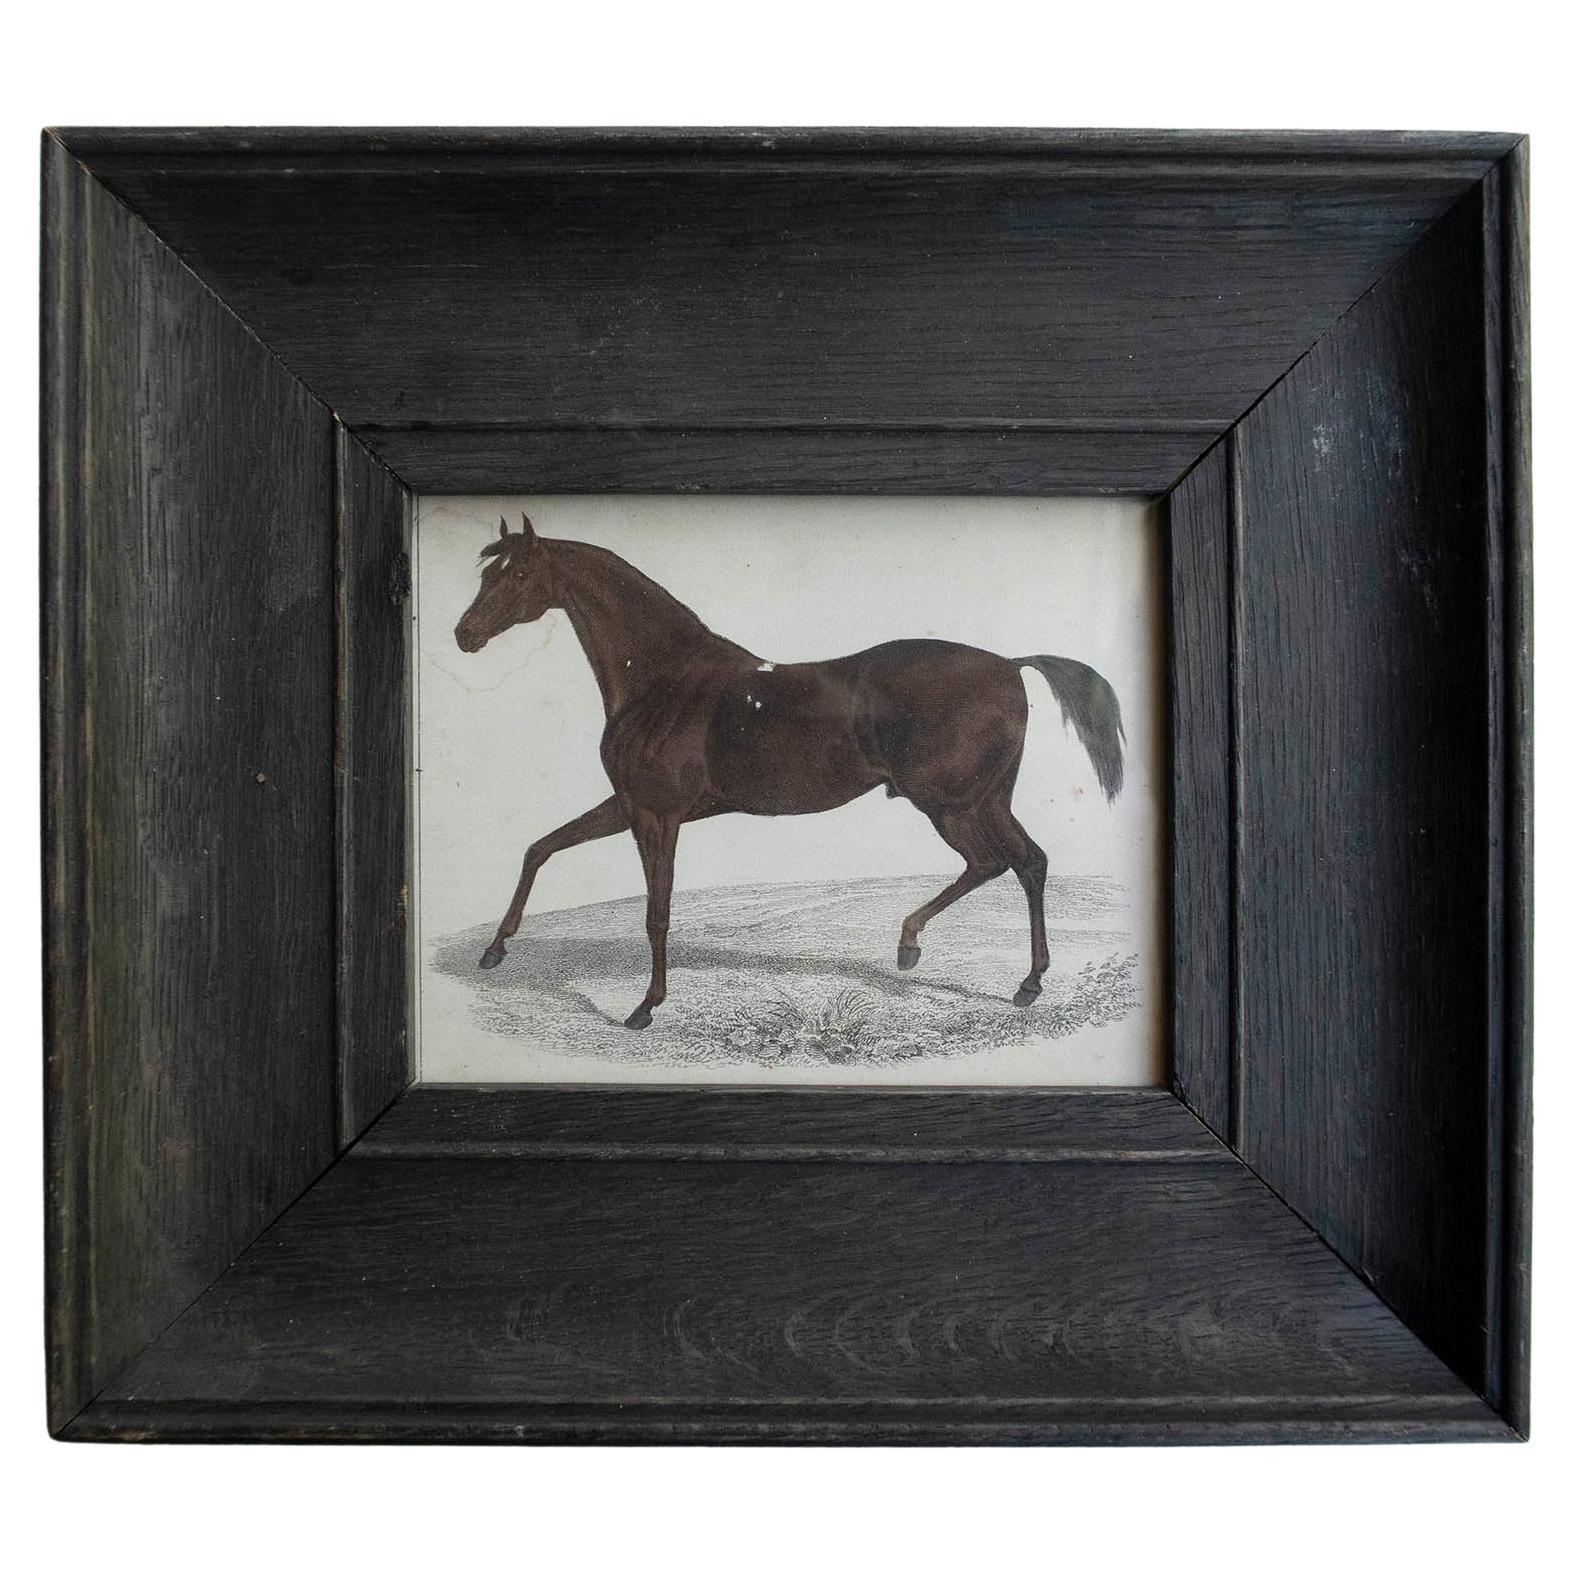 Original Antique Print of a Racehorse, 1847